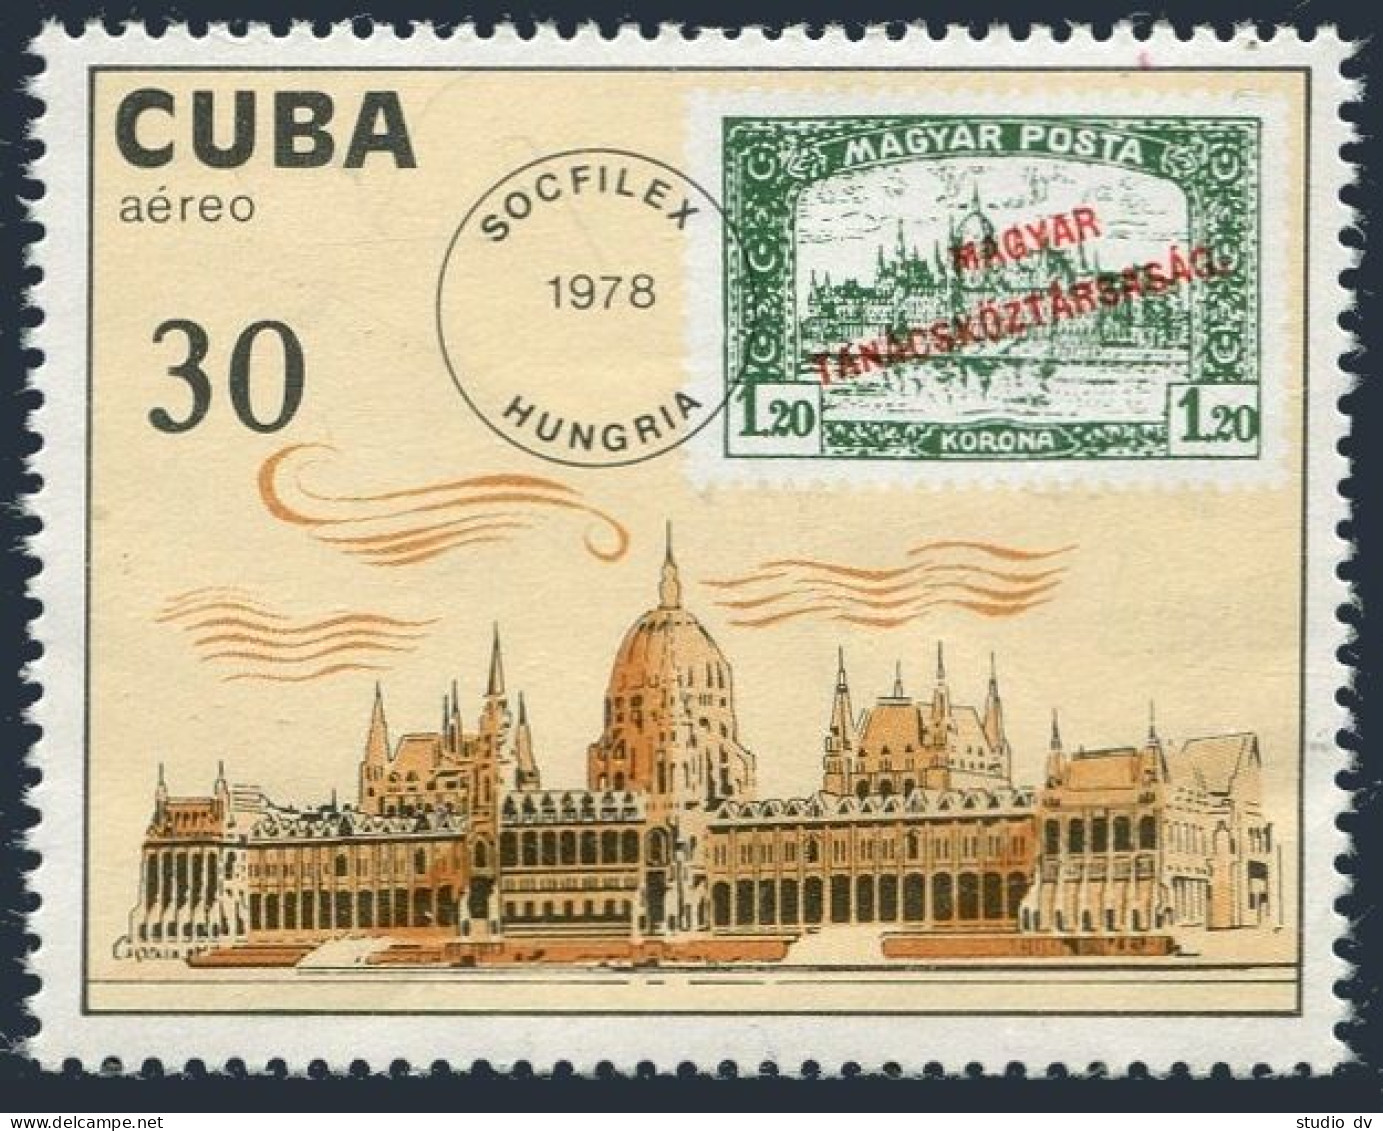 Cuba C280, MNH. Michel 2293. SOCFILEX-1978, Budapest. Hungarian Stamp. - Ongebruikt